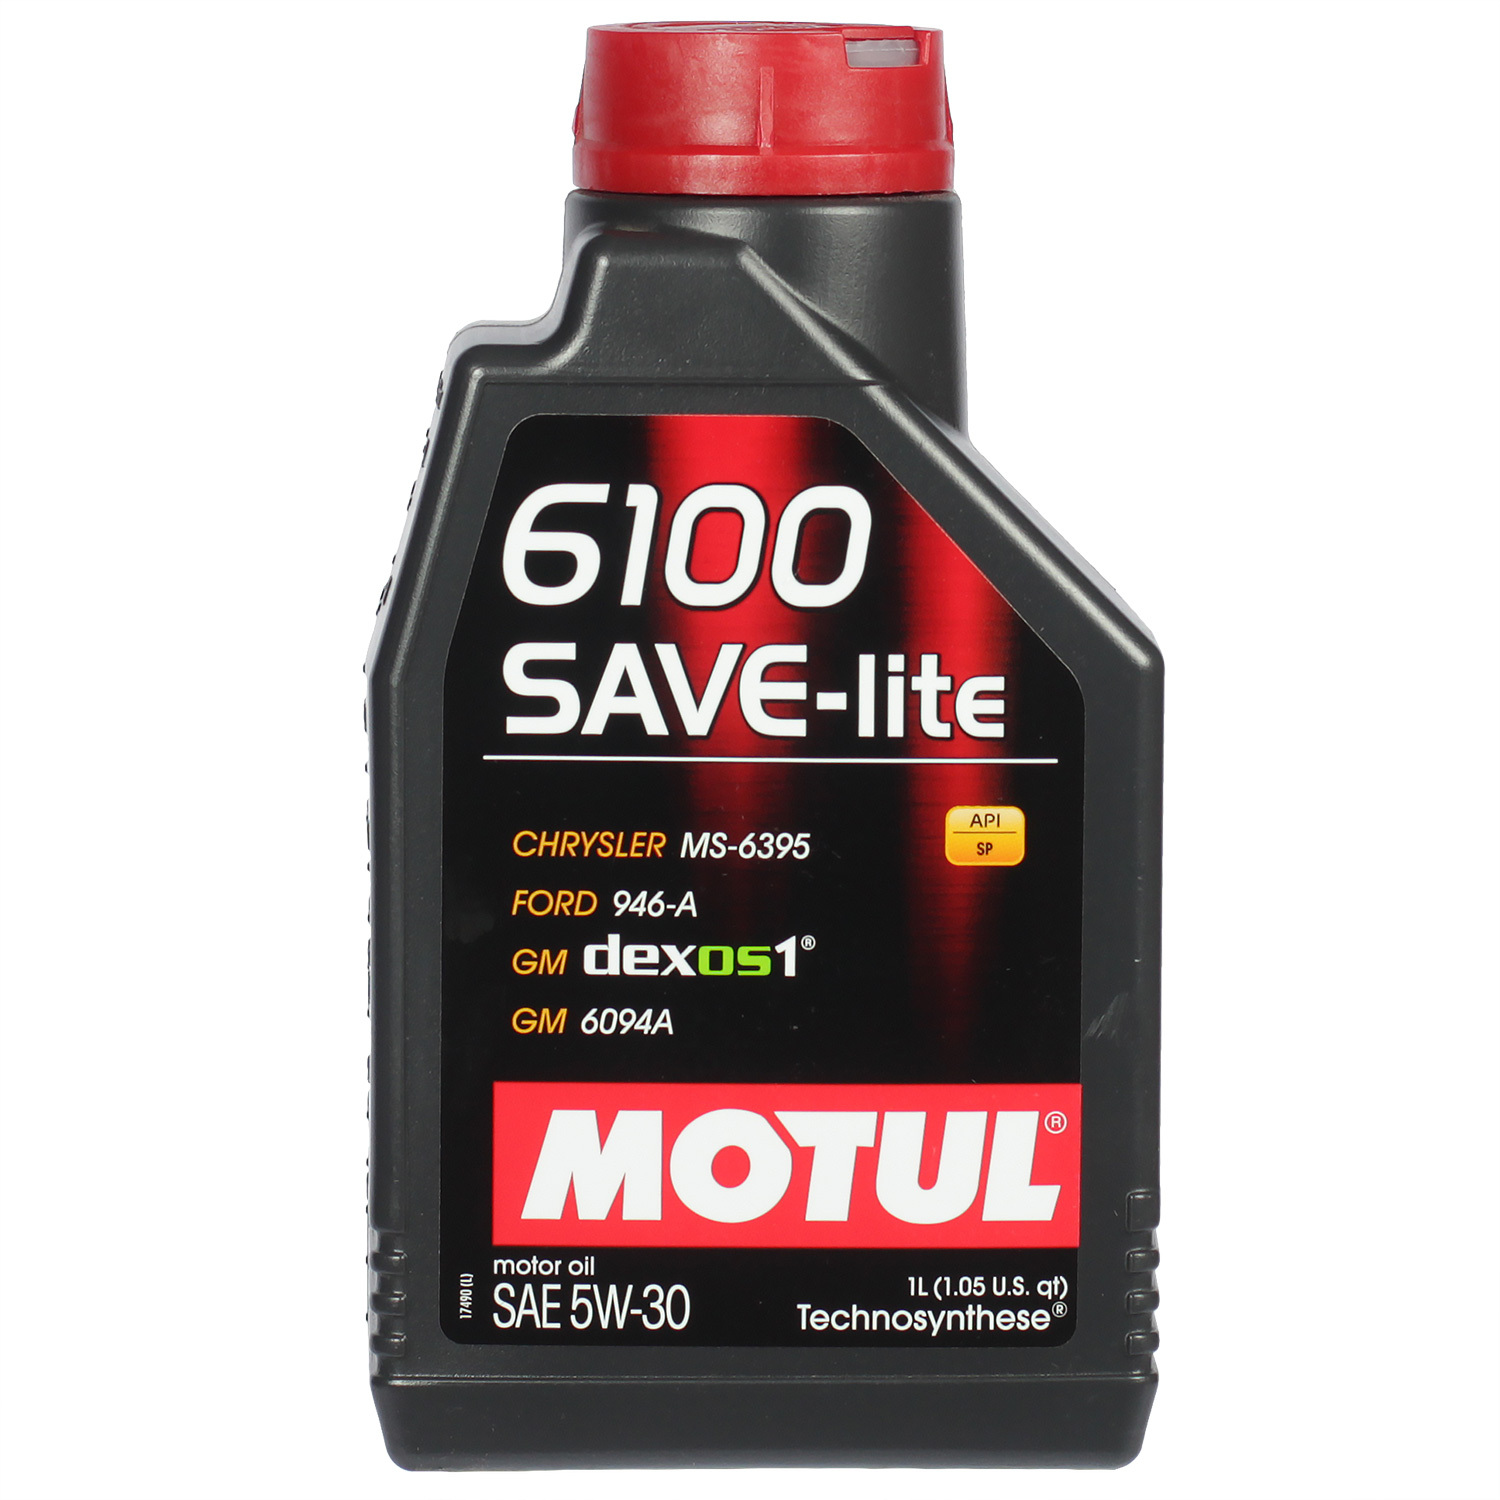 Motul Моторное масло Motul 6100 Save-lite 5W-30, 1 л motul моторное масло motul 6100 synclean 5w 40 5 л